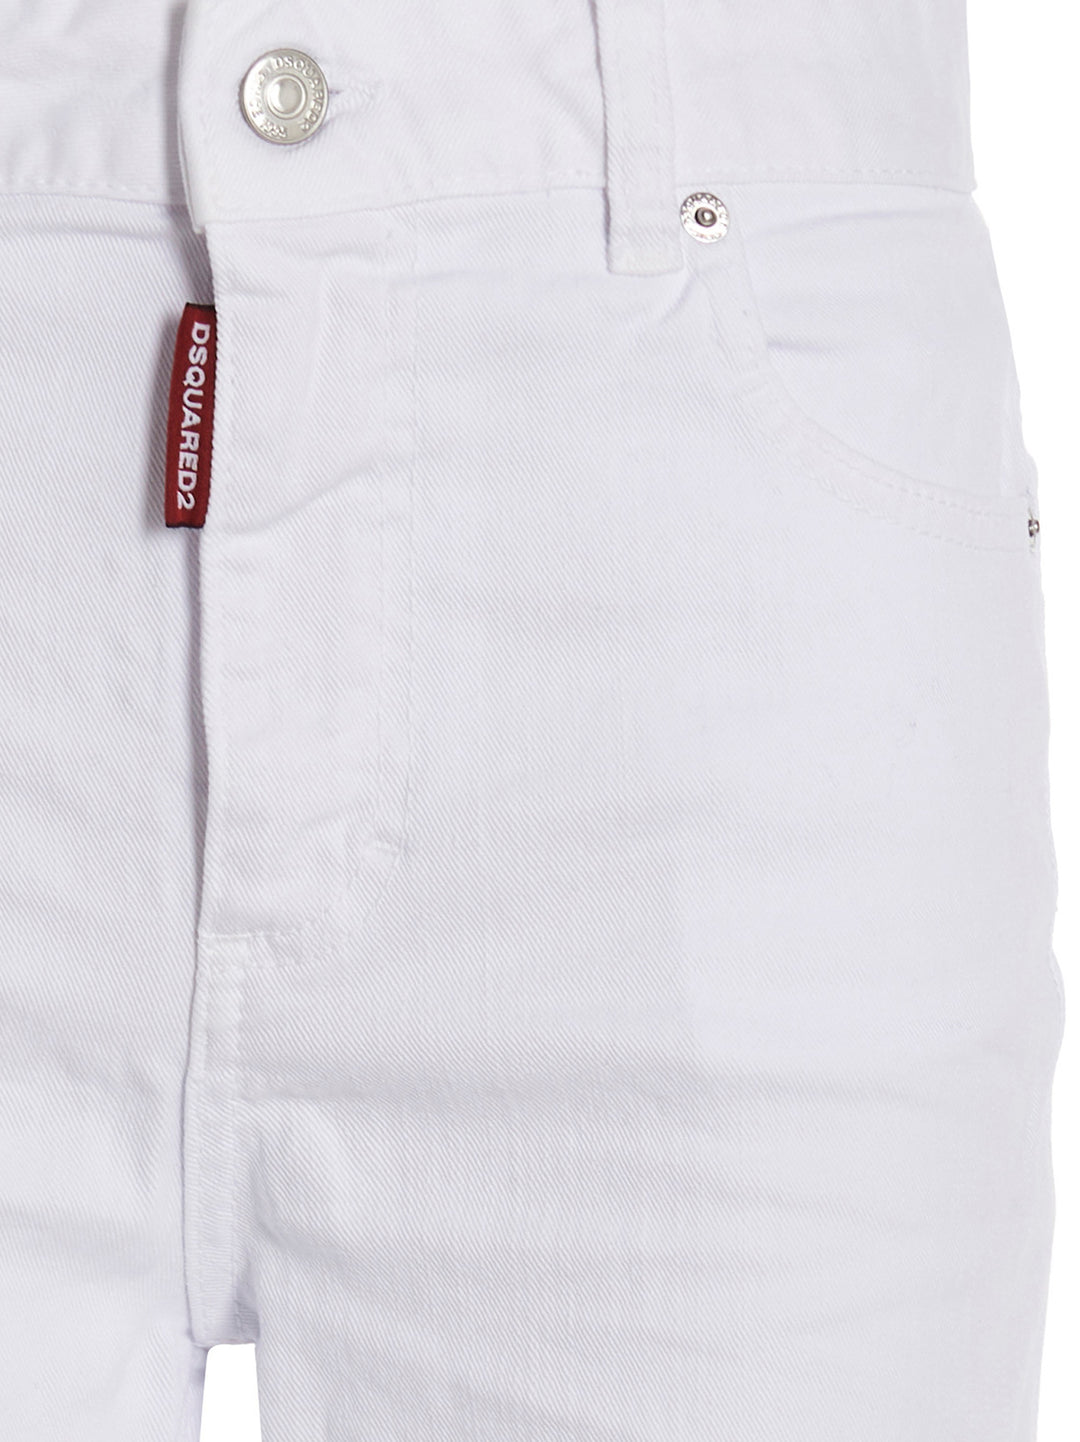 'Super Flared Cropped' Pantaloni Bianco